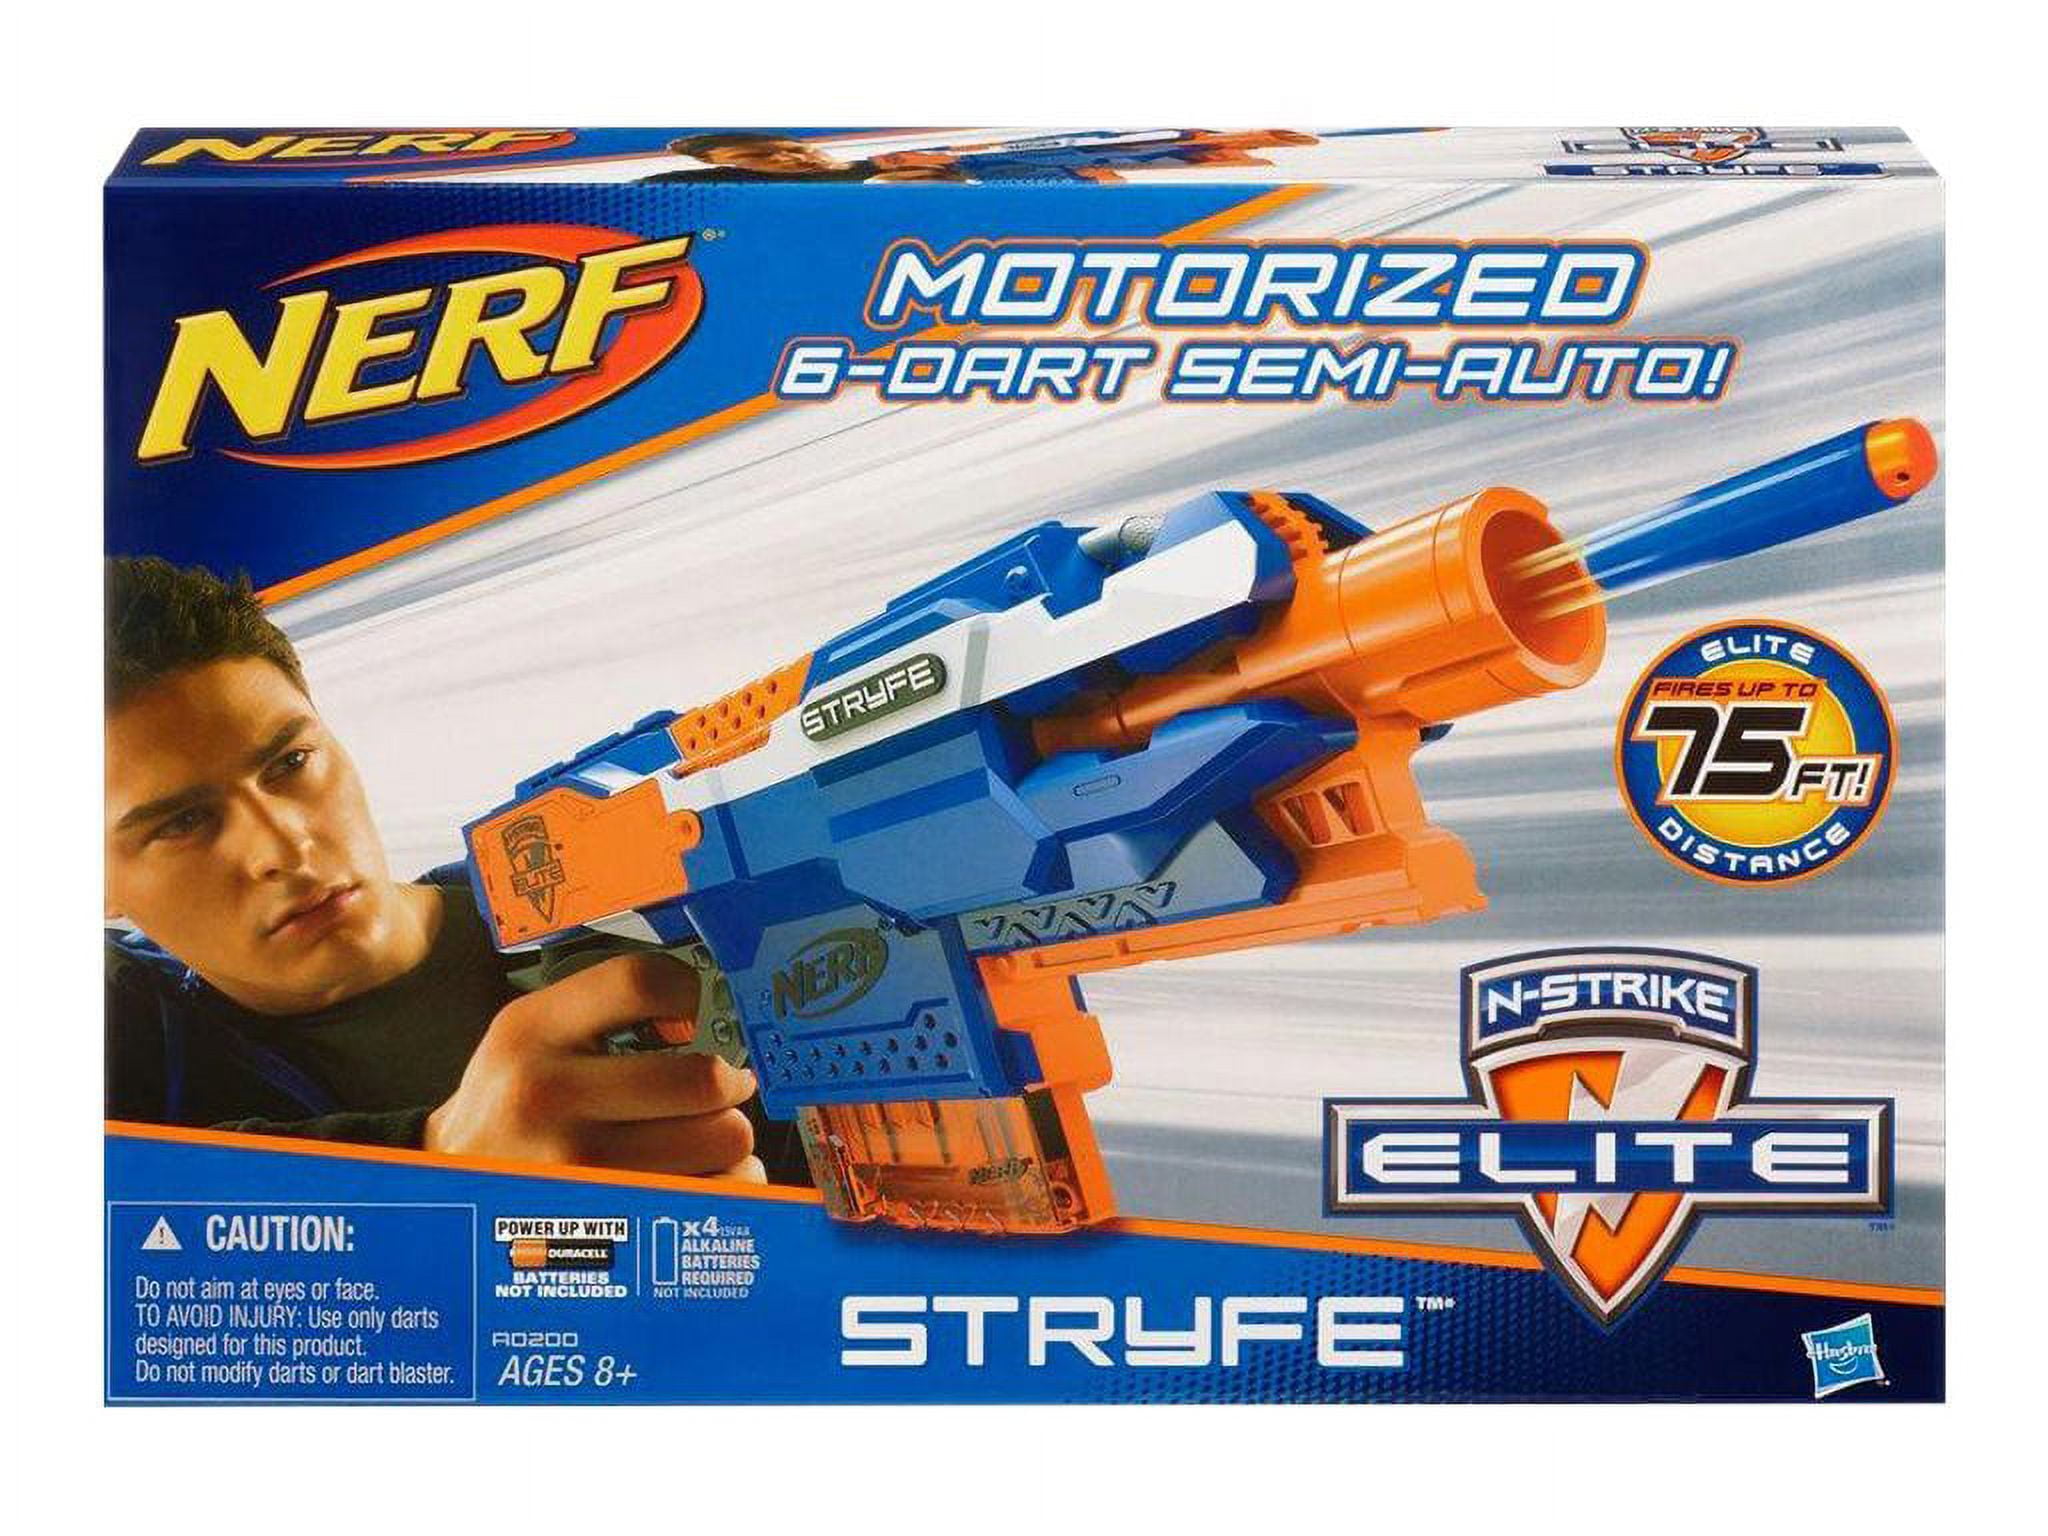 Stryfe (NERF N-Strike Elite Semi-Automatic blaster)